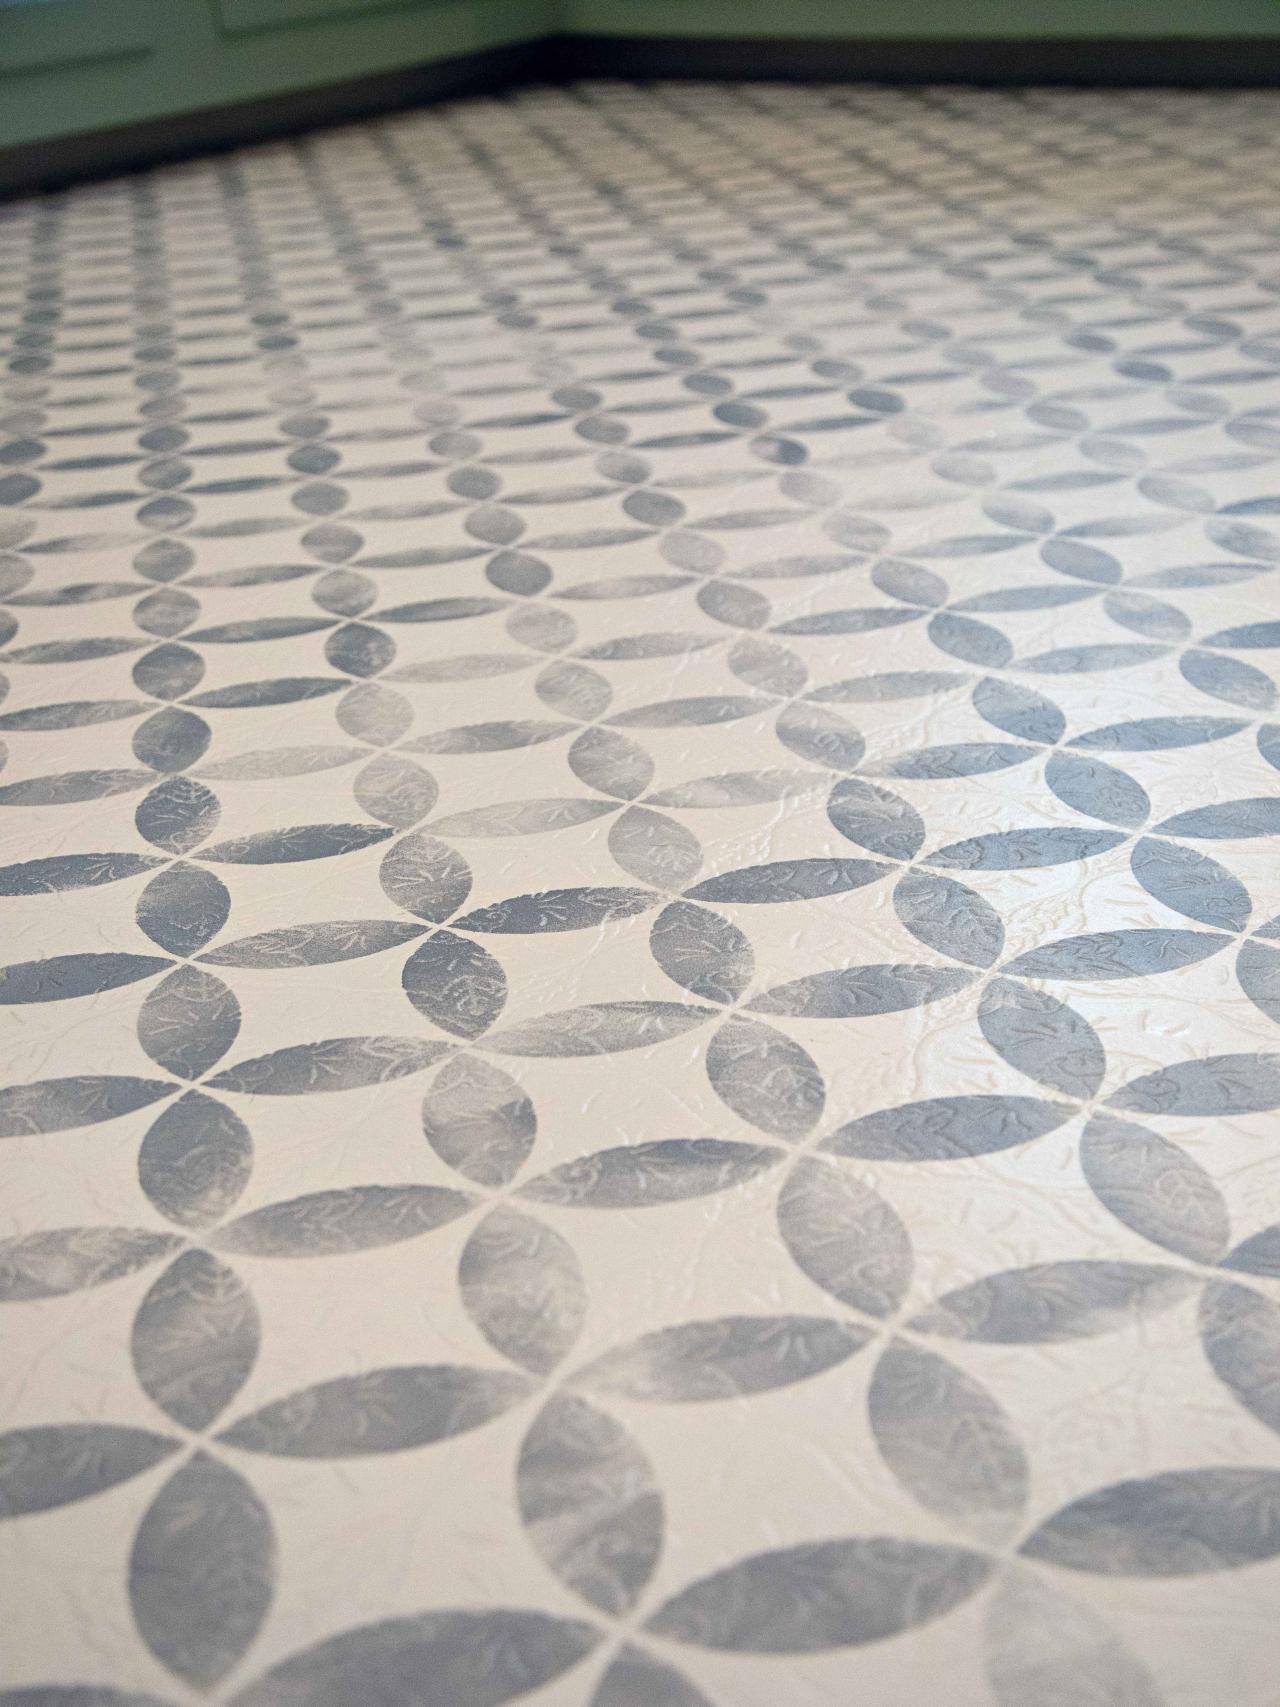 How To Paint Old Vinyl Floors Look, Concrete Floor Primer For Vinyl Tiles